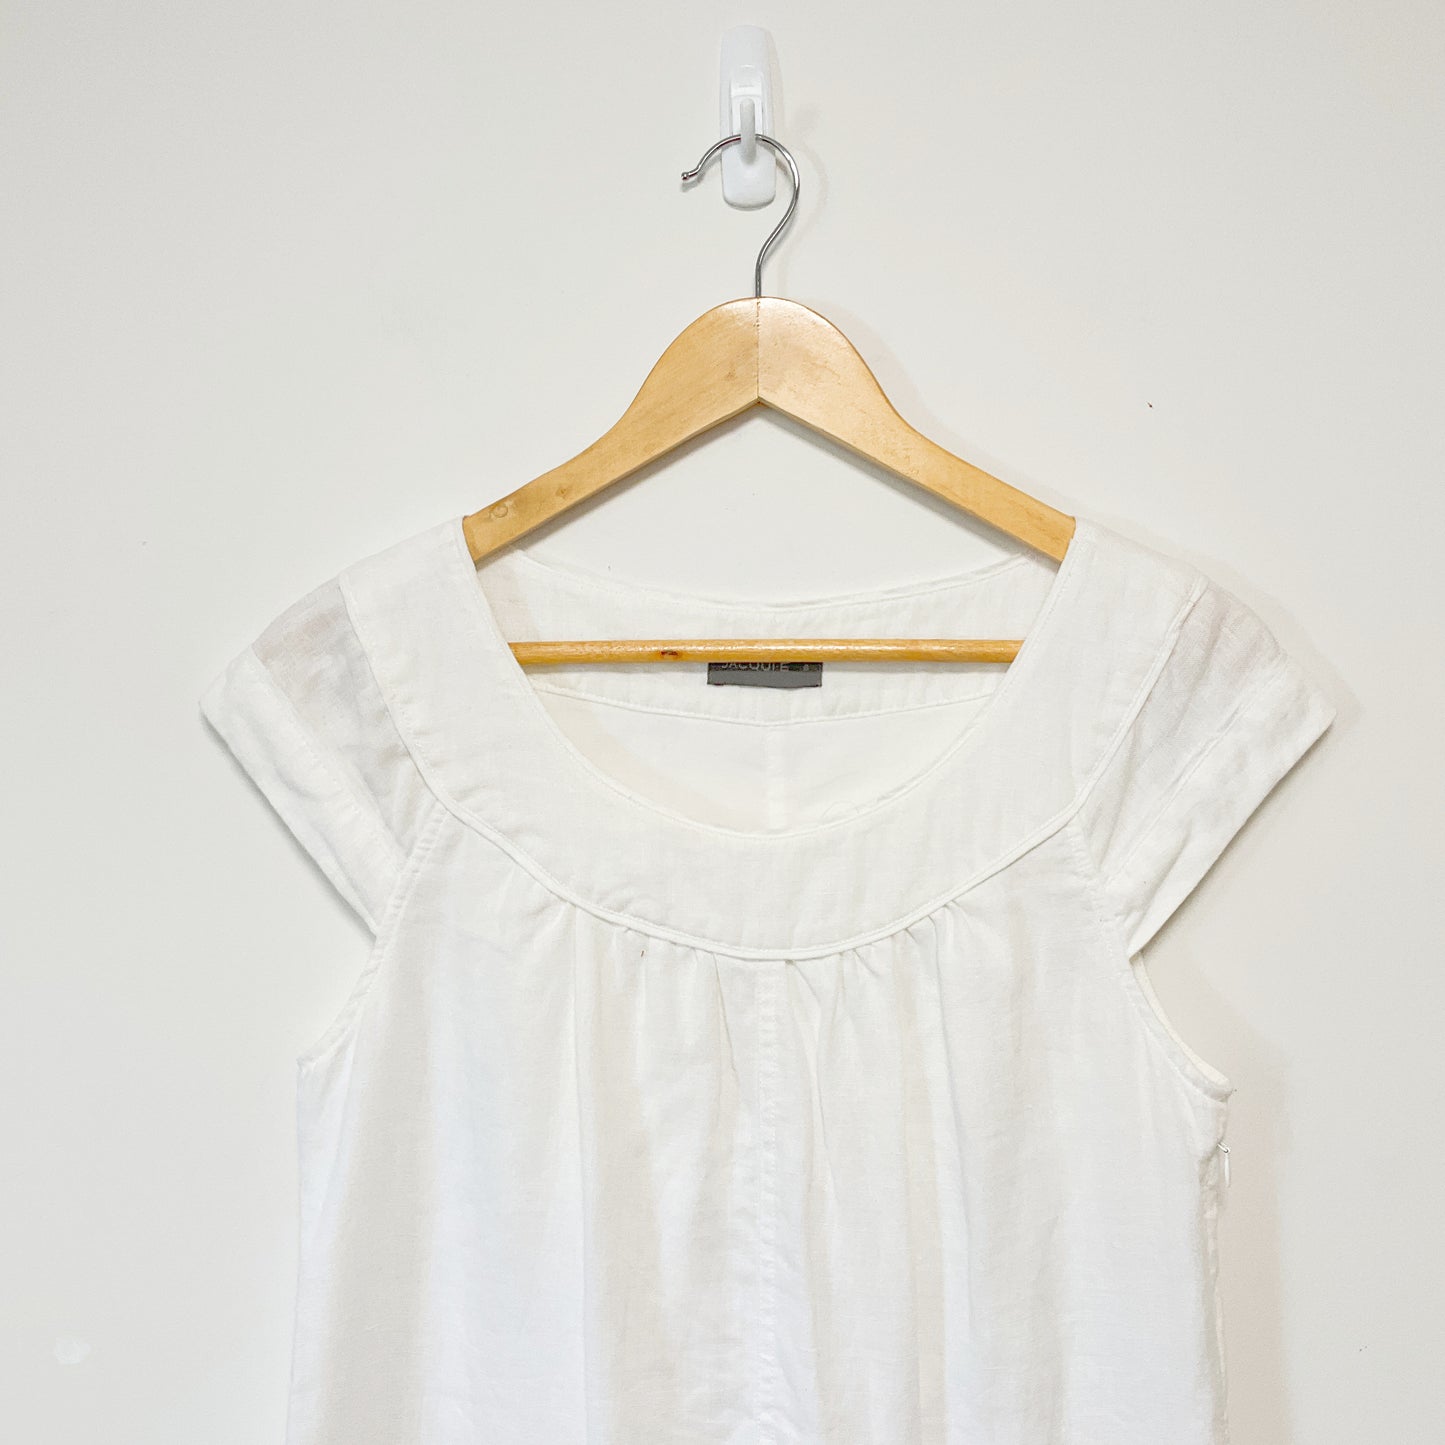 JACQUI.E - White Dress With Pockets